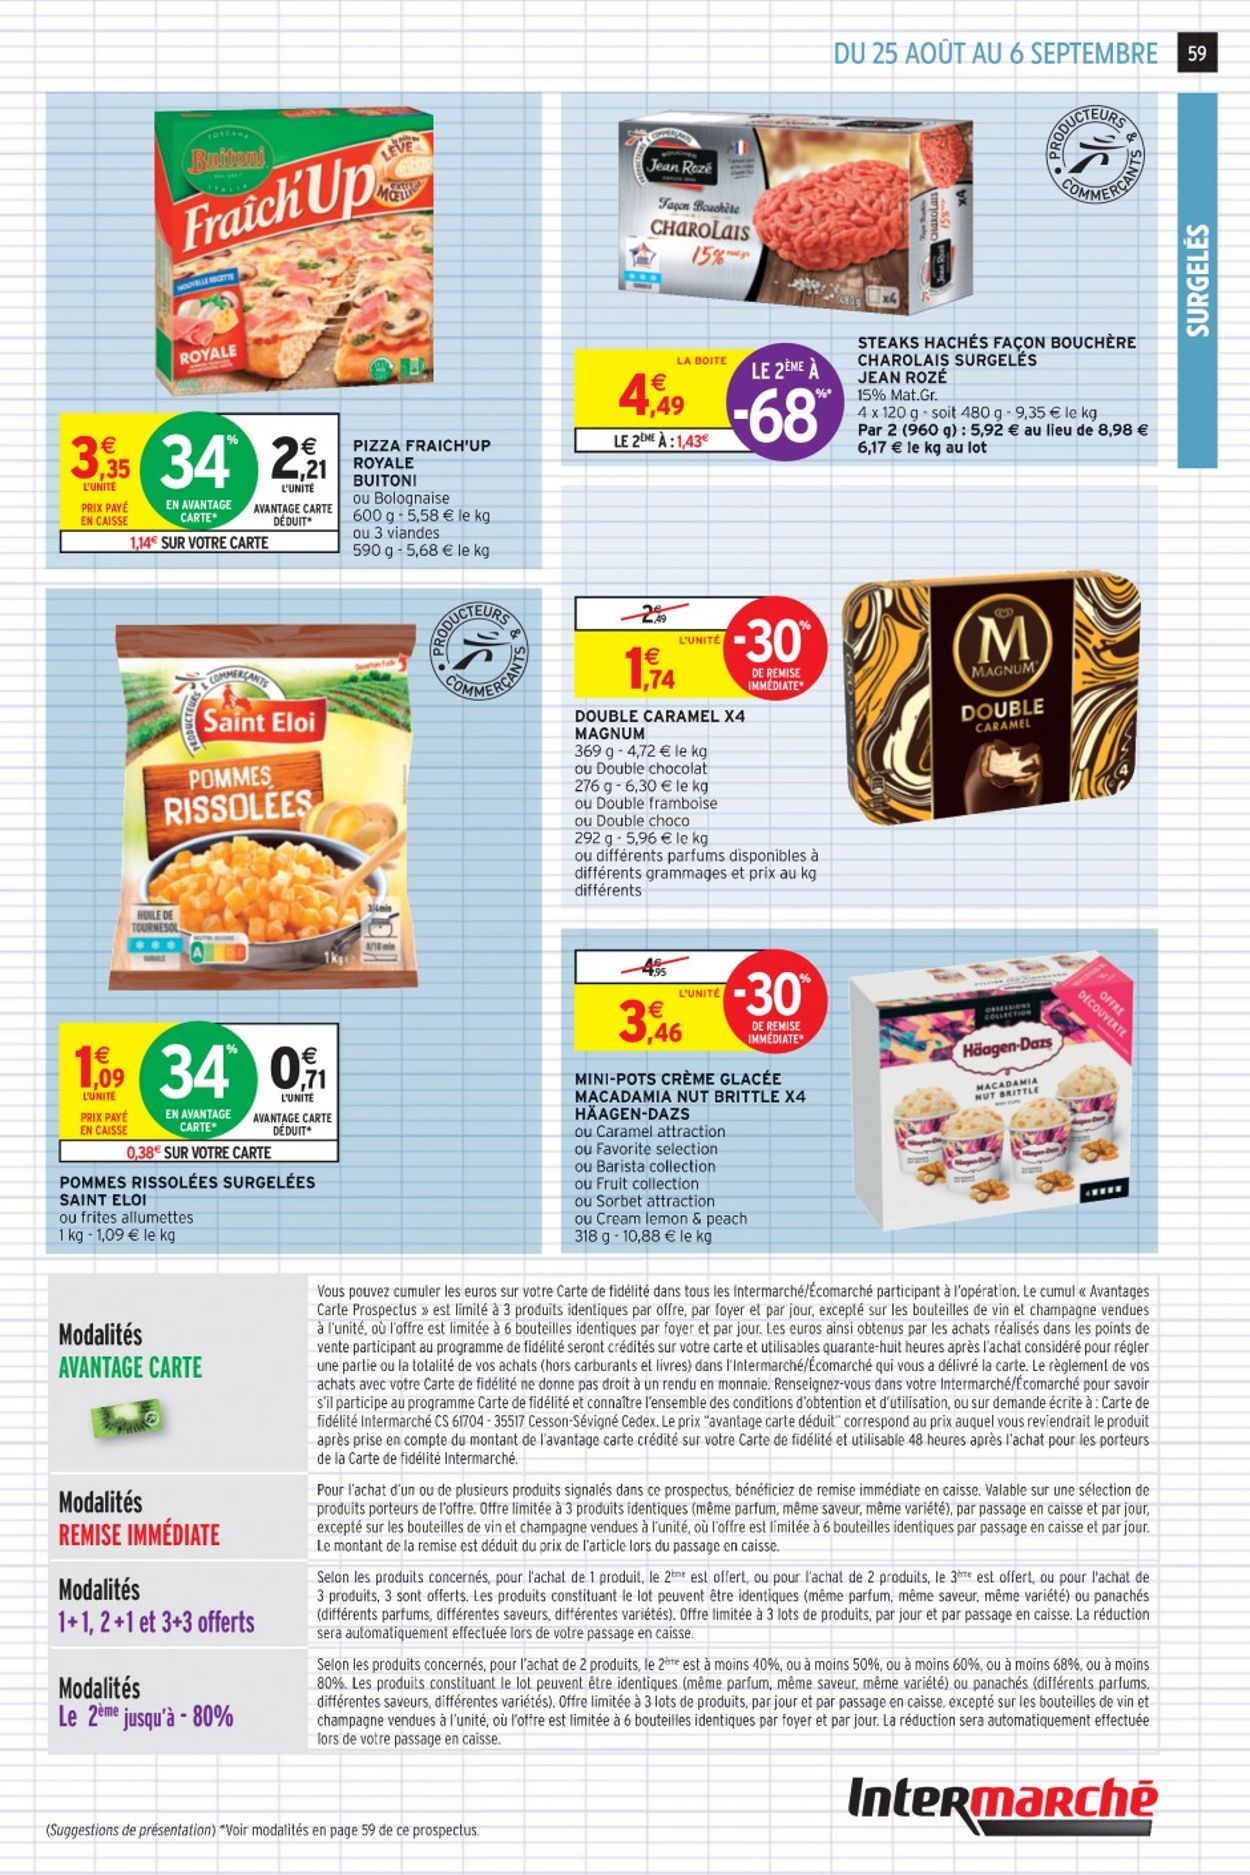 Intermarché Catalogue - 25.08-06.09.2020 (Page 59)